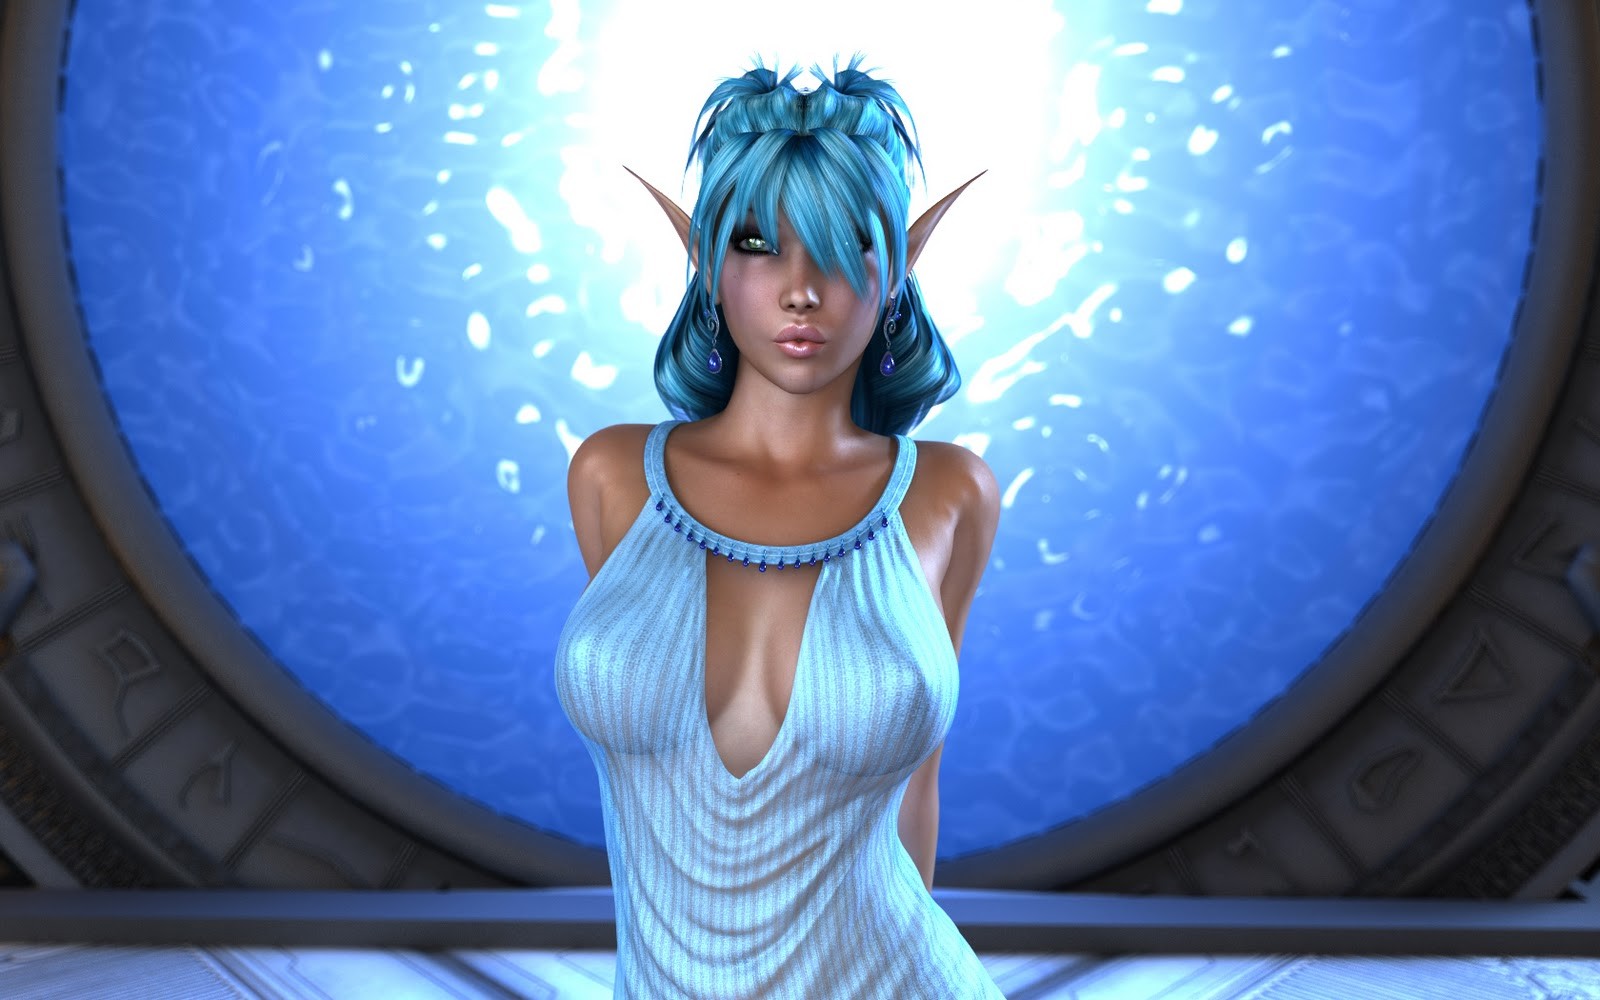 General 1600x1000 Stargate artwork erotic art  science fiction CGI pointy ears blue hair boobs big boobs standing